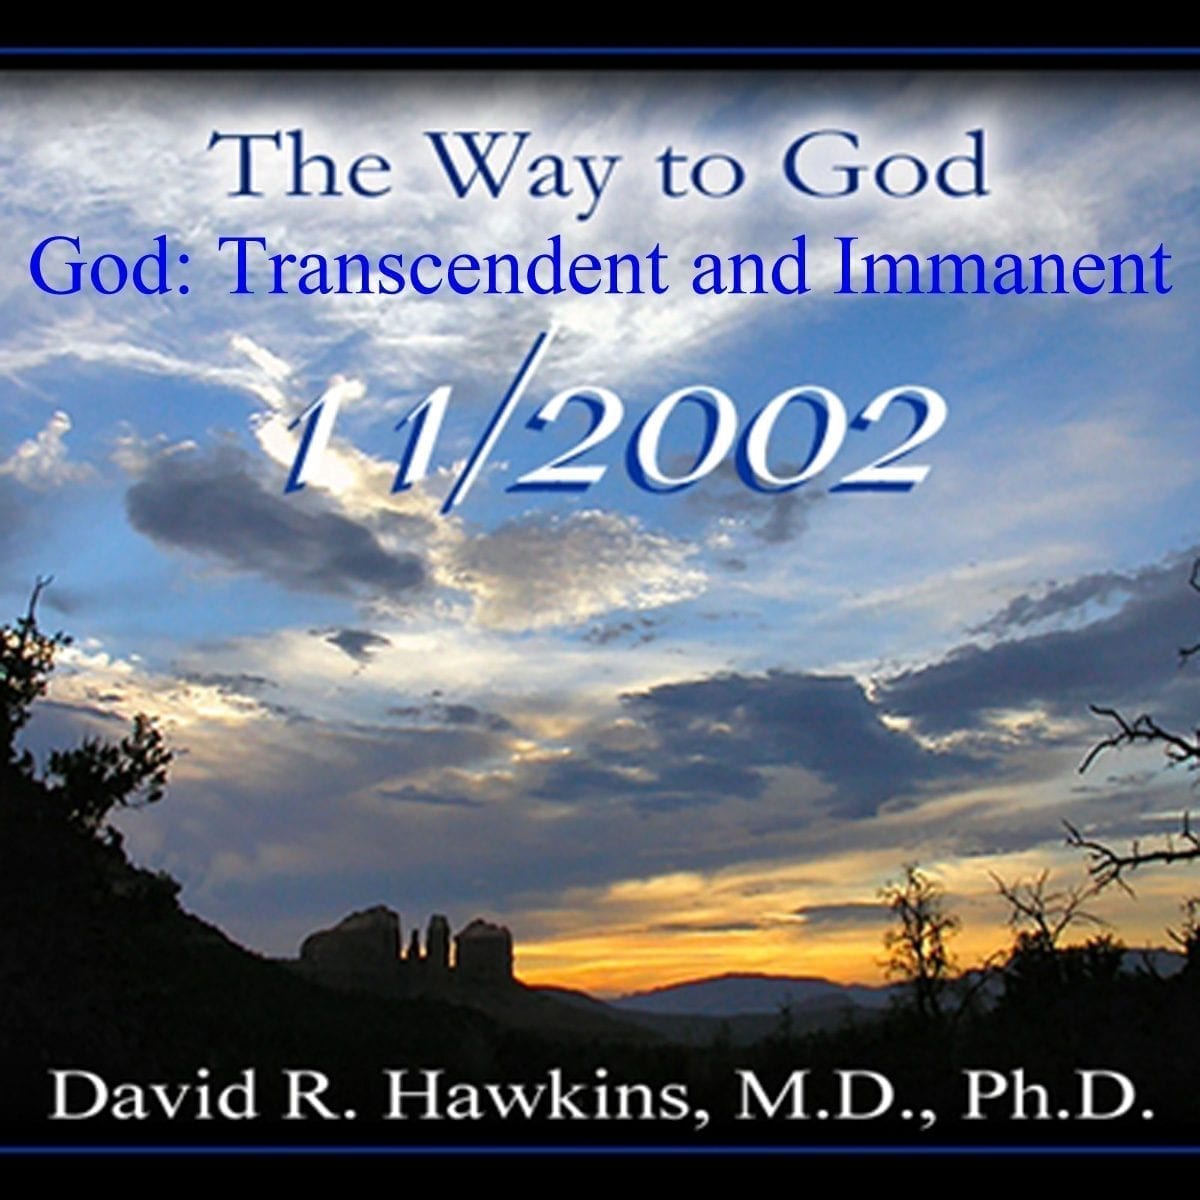 God: Transcendent and Immanent (Nov 2002)